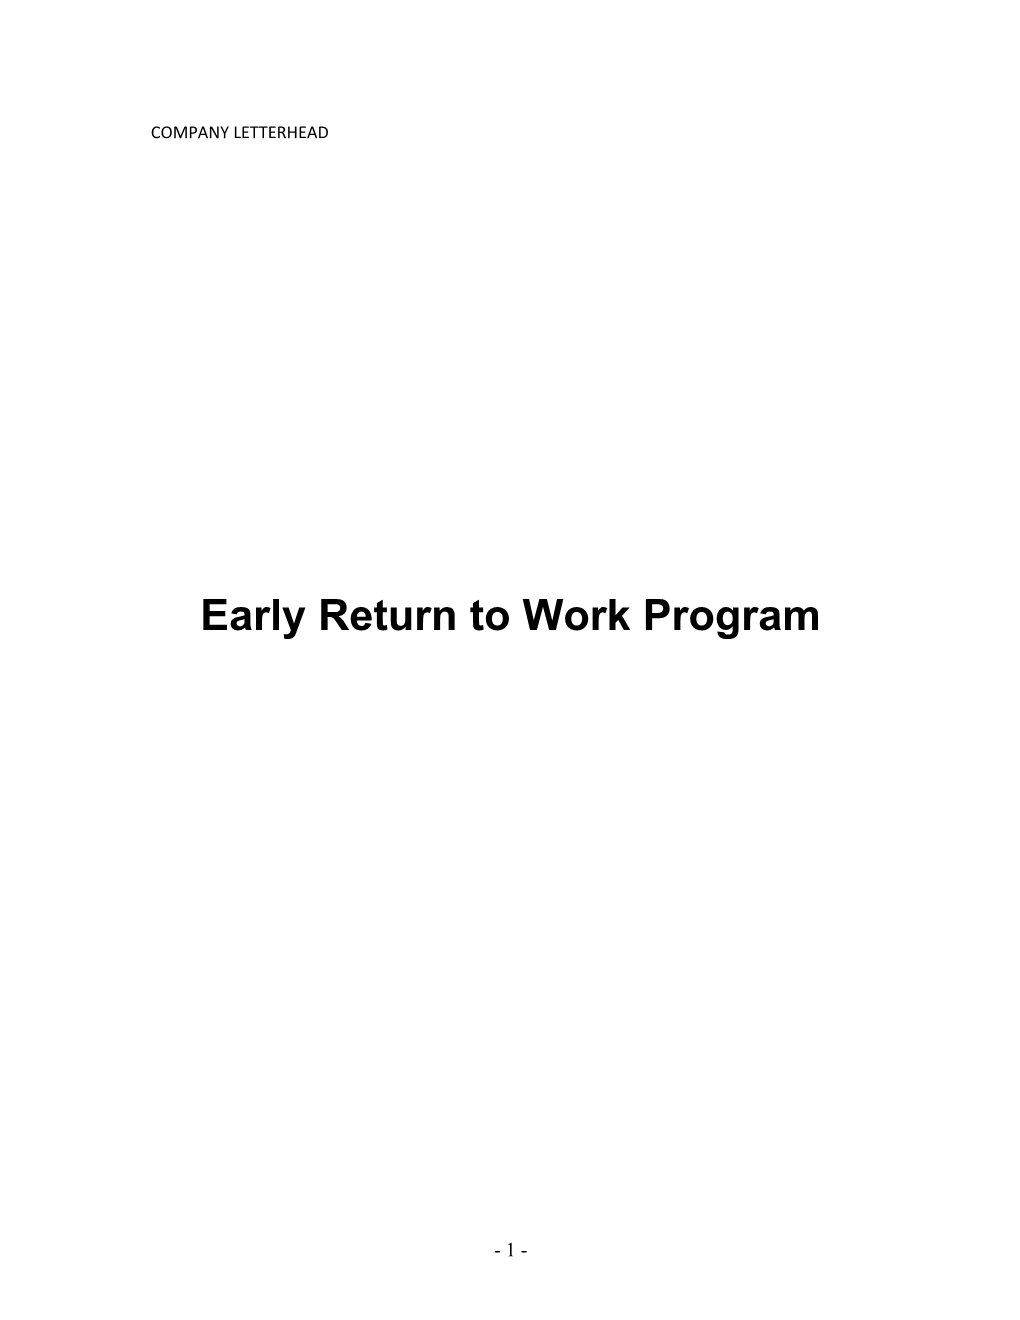 Early Return to Work Program